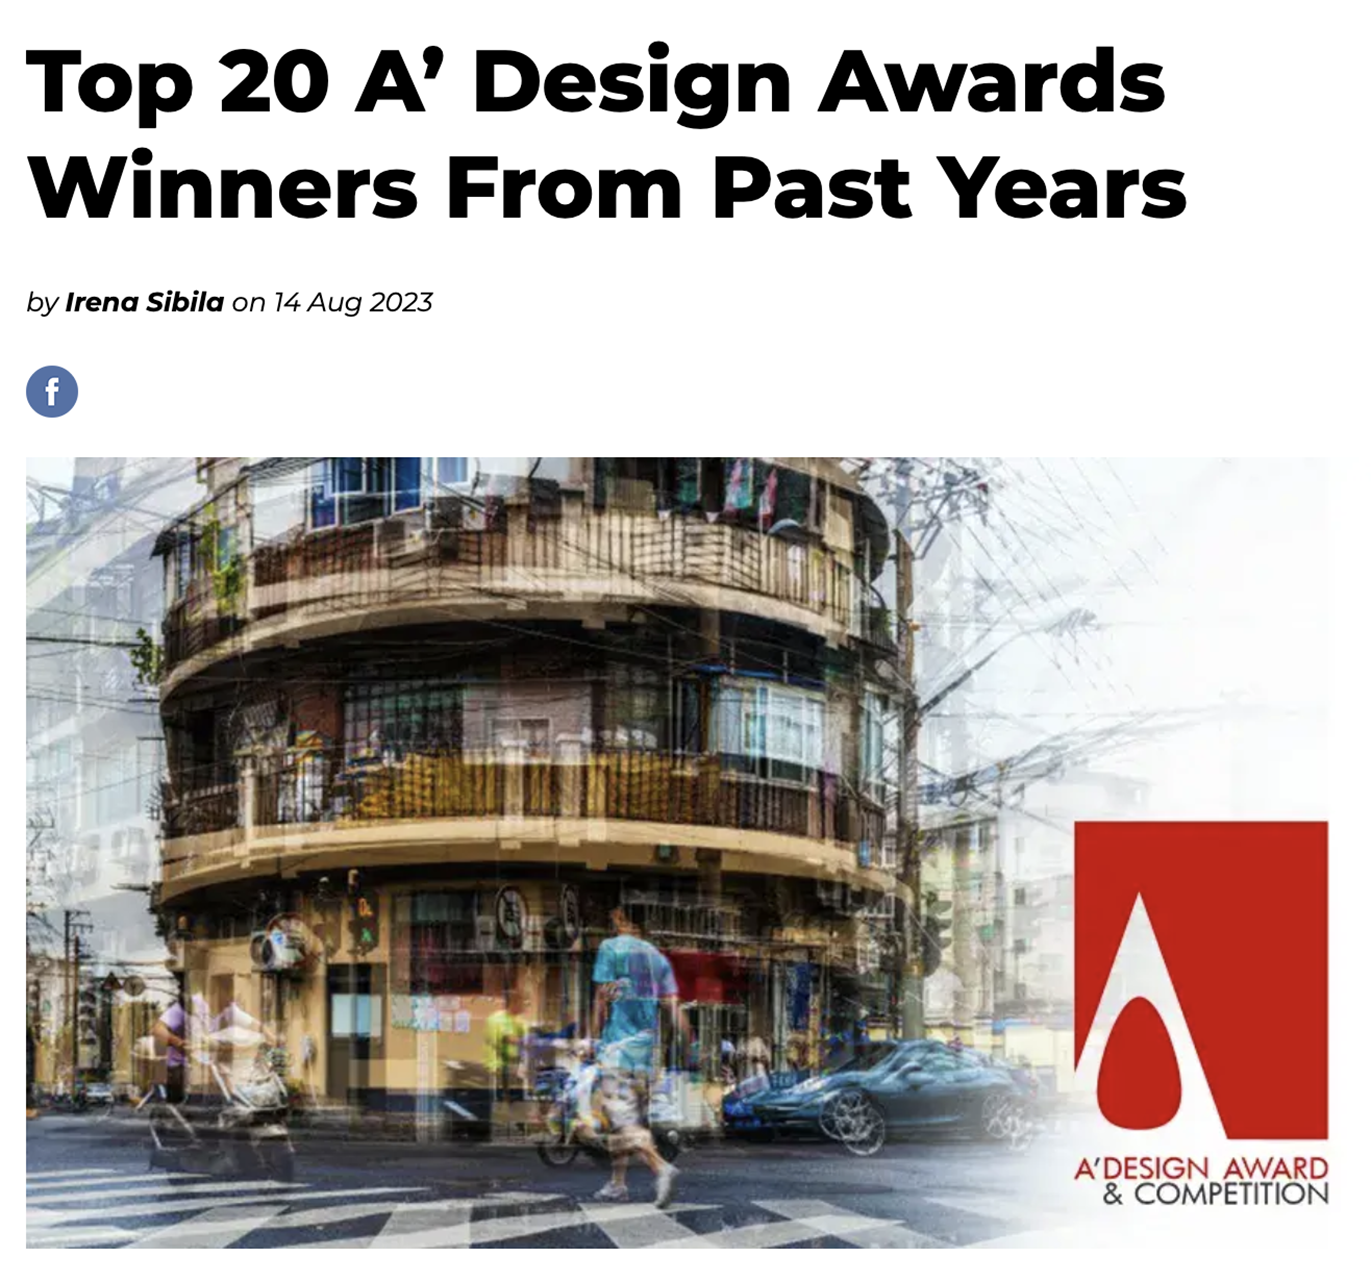 Stamatakis Bakery A Design Awards winner was featured at infodesigners.eu